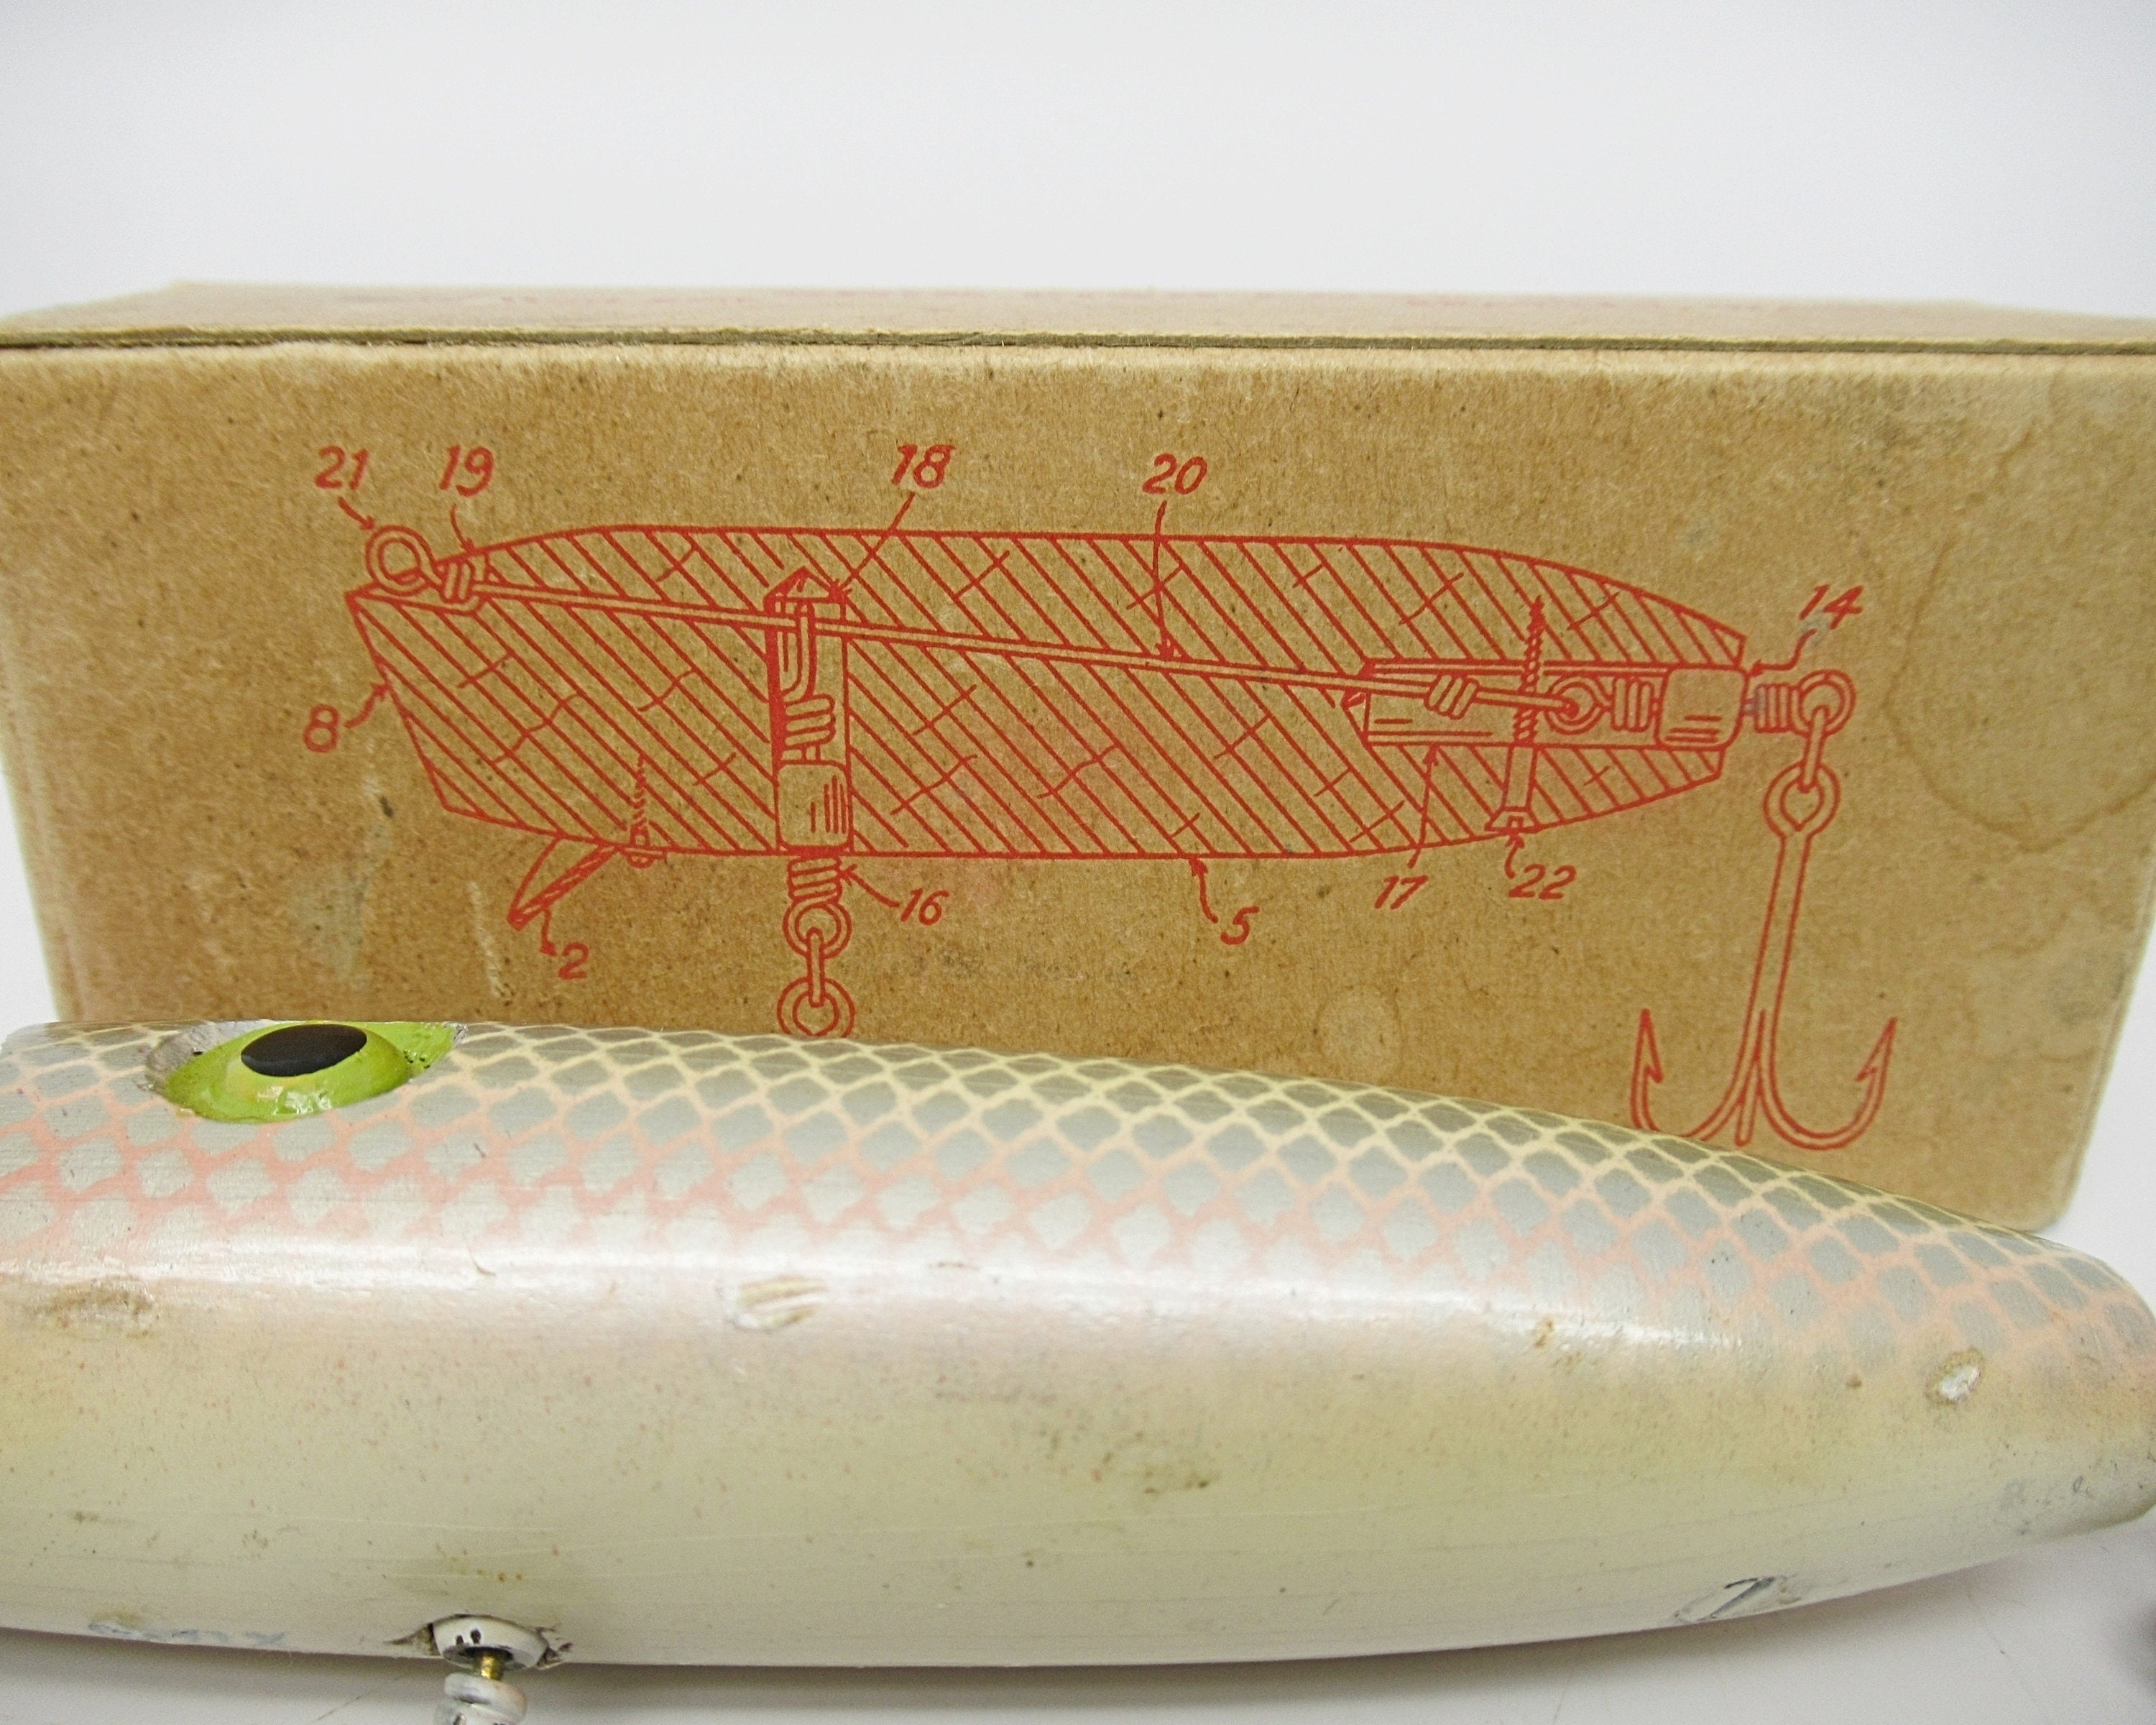 Vintage Chix Wooden Fishing Lure Plug Fishing Gift for Dad Fishing